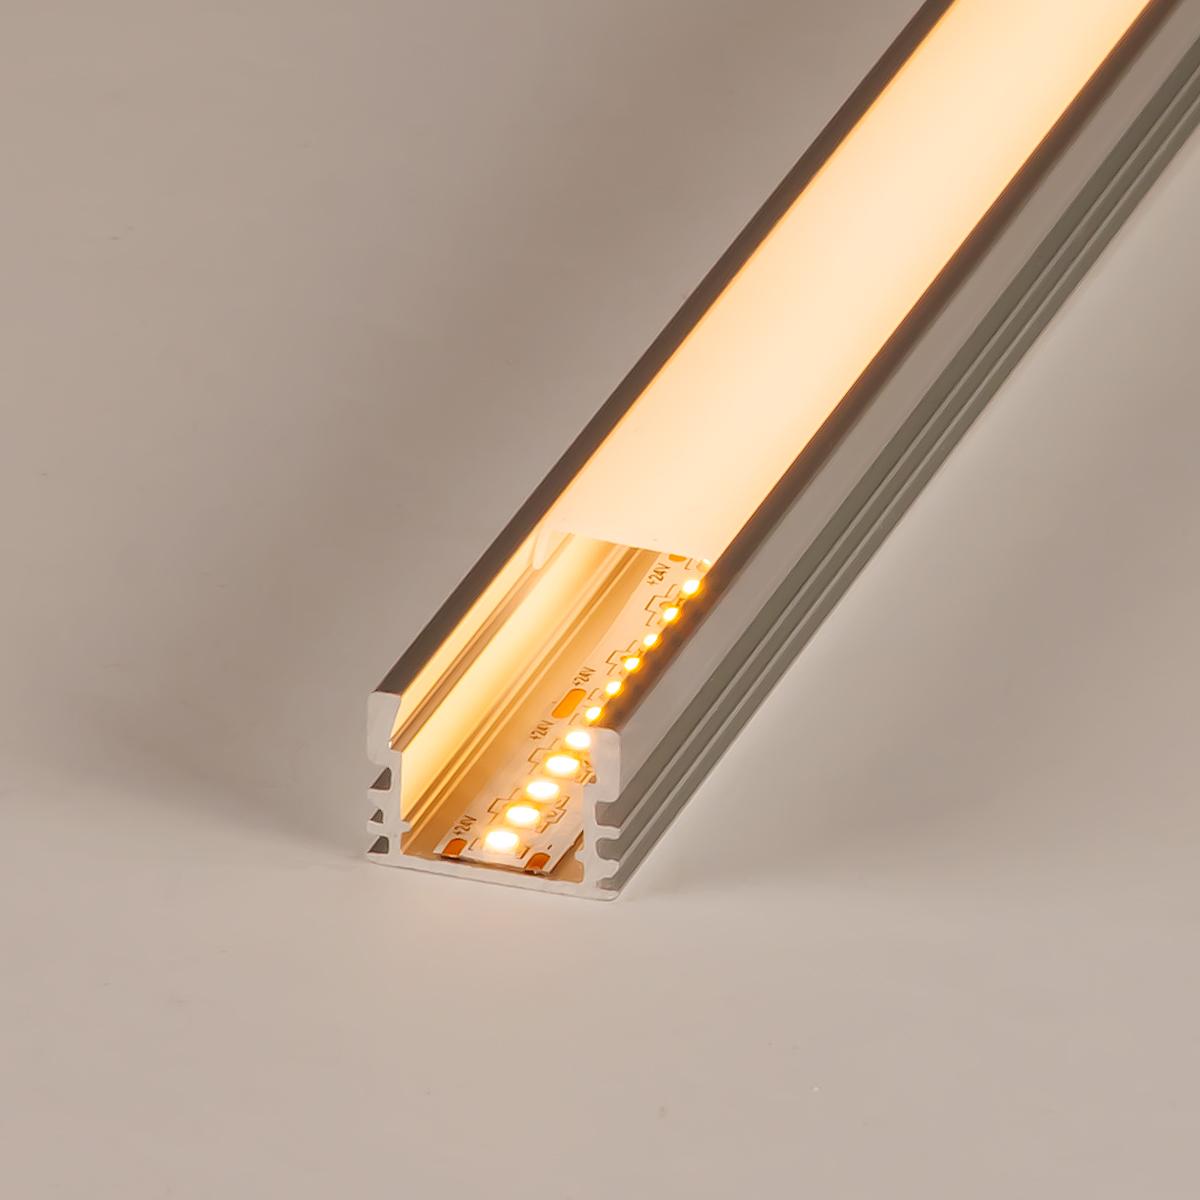 Alu Profil für LED Streifen U-Profil silber eloxiert 17 x 12mm opal 200cm -  Parcolux - LED Leuchtmittel Onlineshop